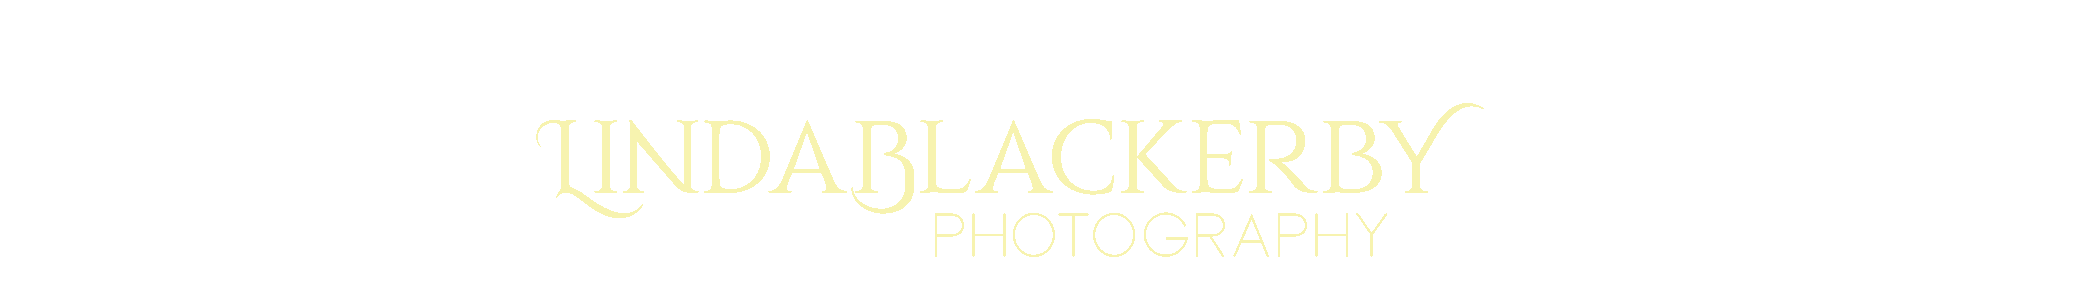 Linda Blackerby Photography